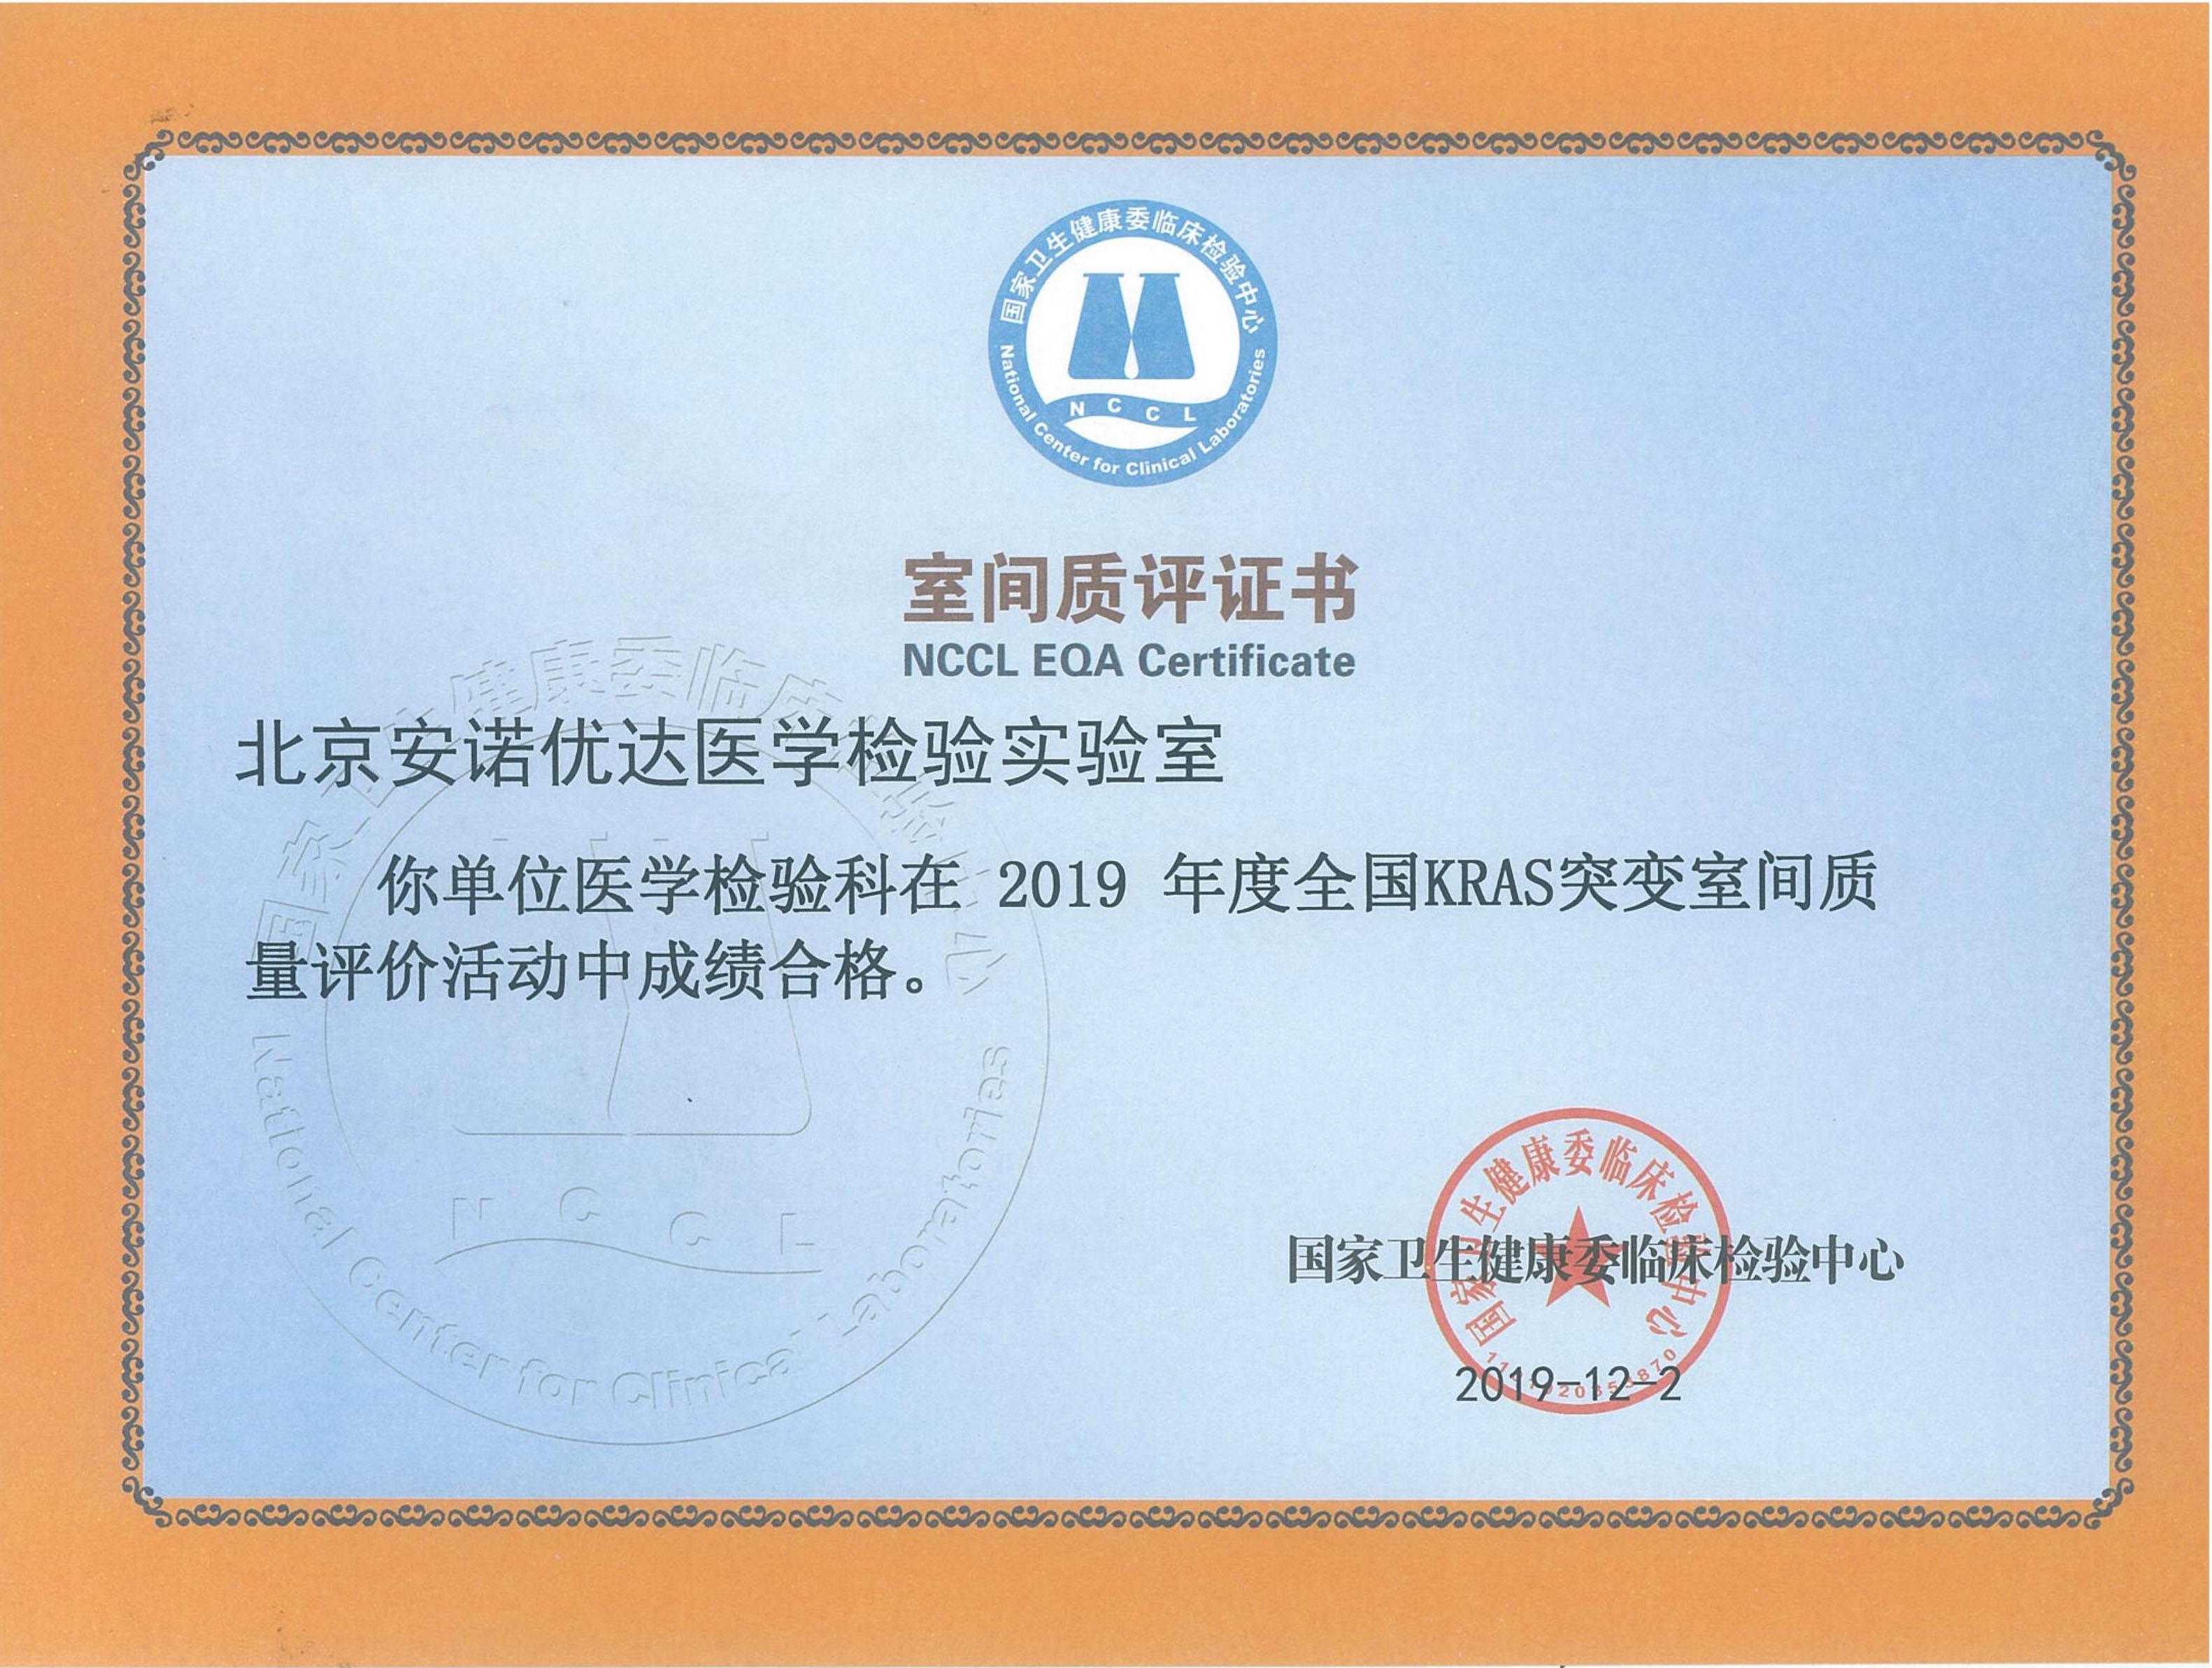 NCCL EQA Certificate of KRAS Mutation (2019)